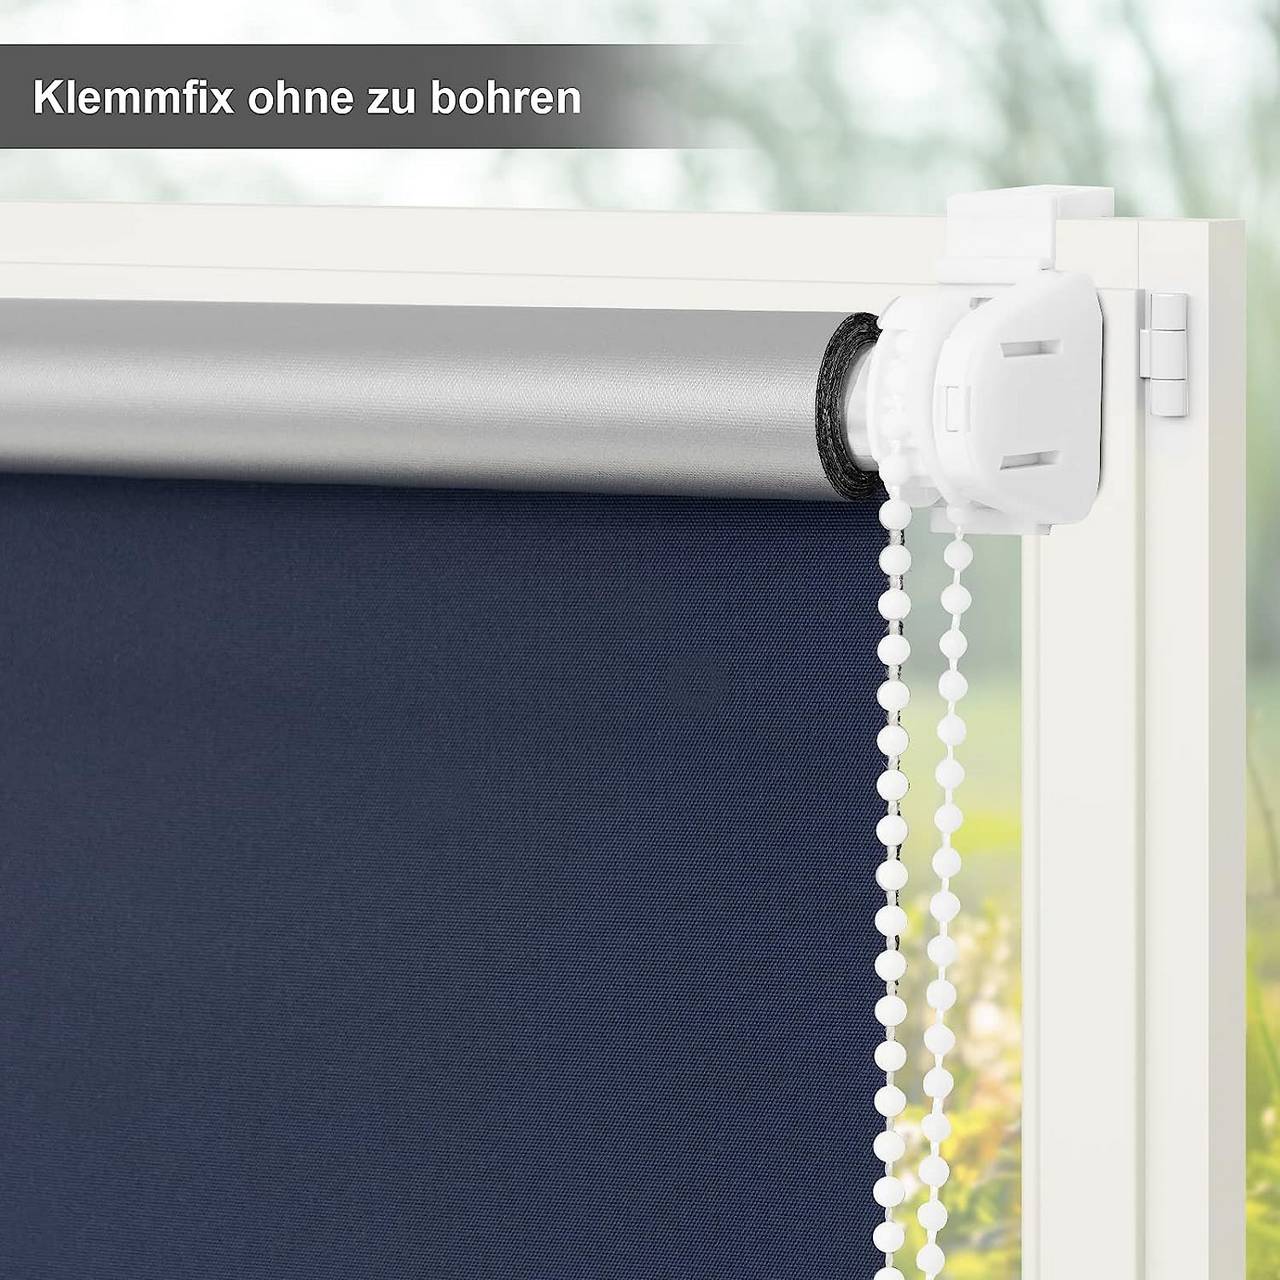 Claraboya Techo 210x150cm Aislante Térmico Anti UV, Estor Enrollable Opaco,  para Windows Roto Protección Solar Reducción del Calor